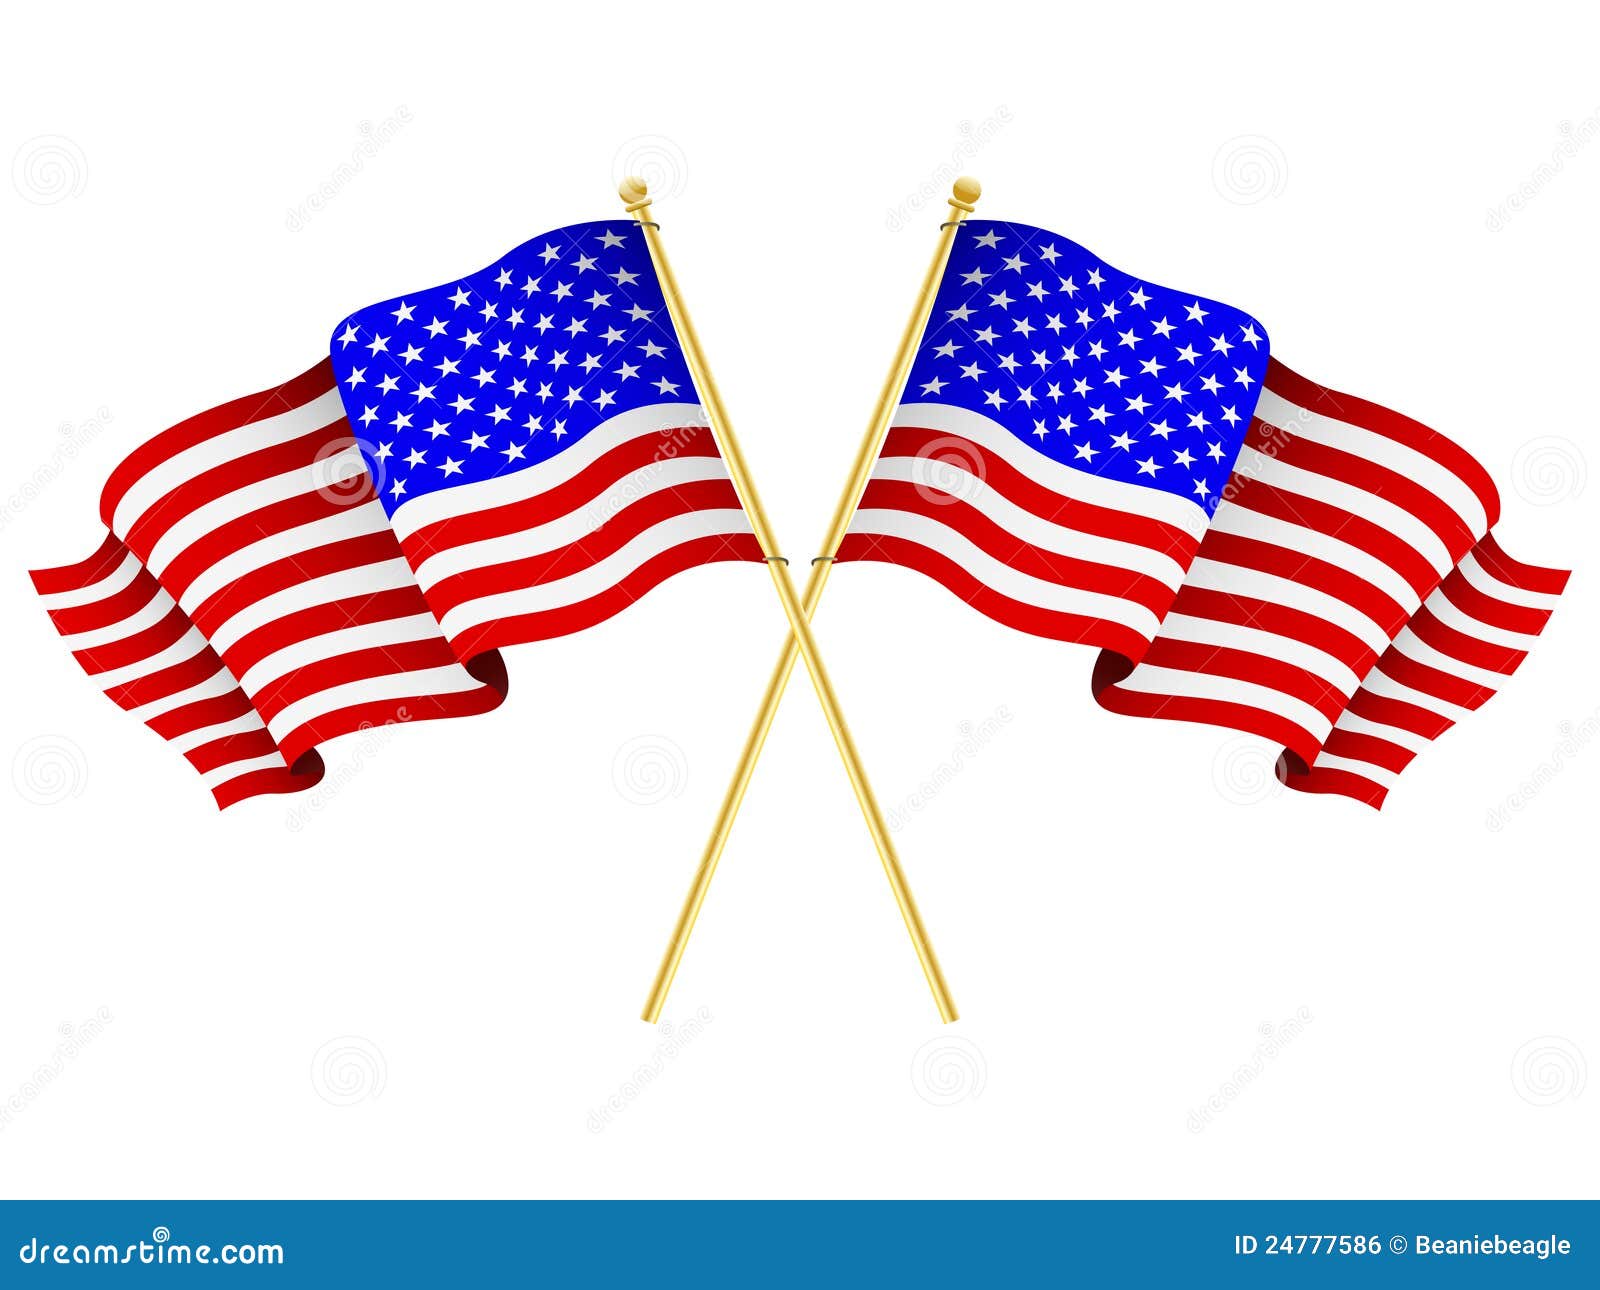 small american flag clip art free - photo #33